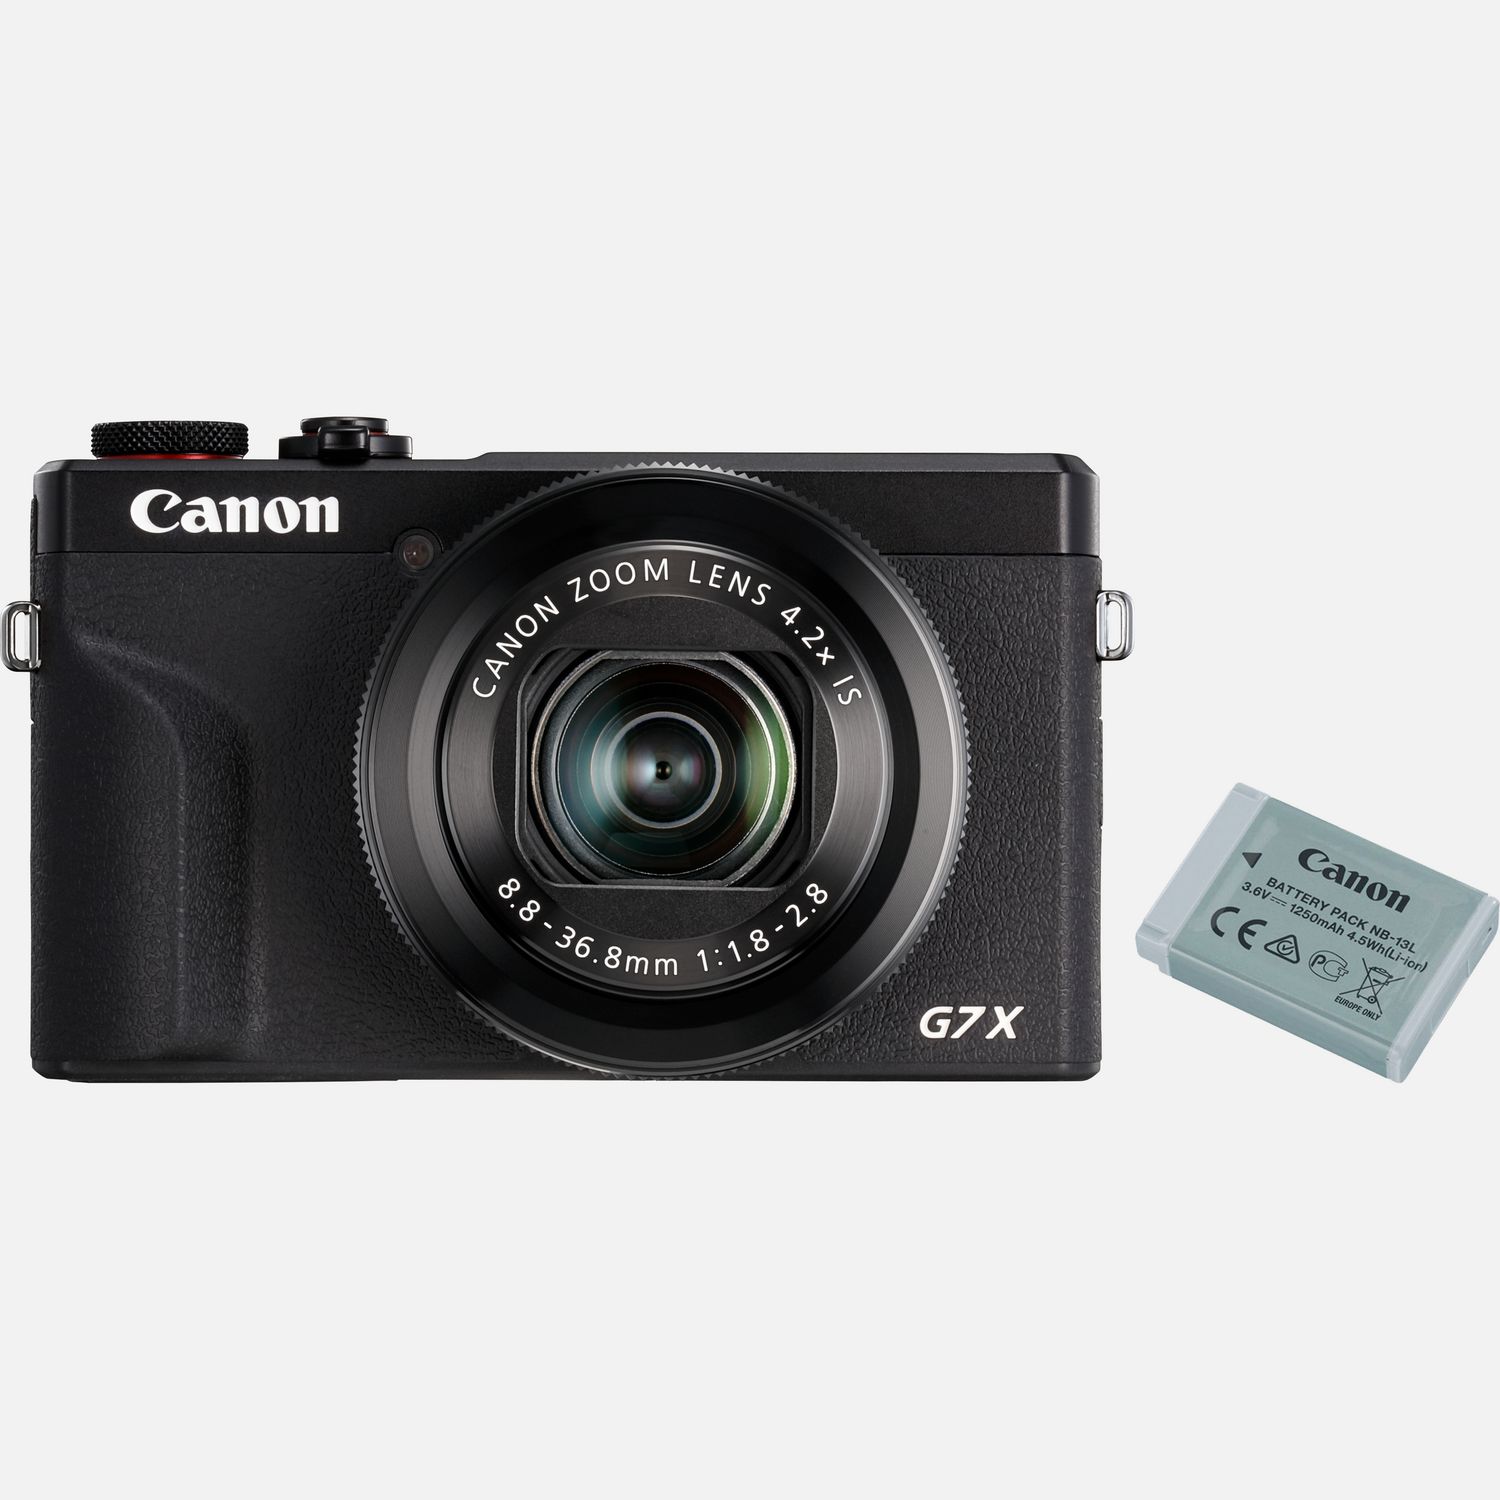 Hertog Cusco Badkamer Buy Canon PowerShot G7 X Mark III compactcamera, zwart + extra accu in  Wifi-camera's — Canon Belgie Store